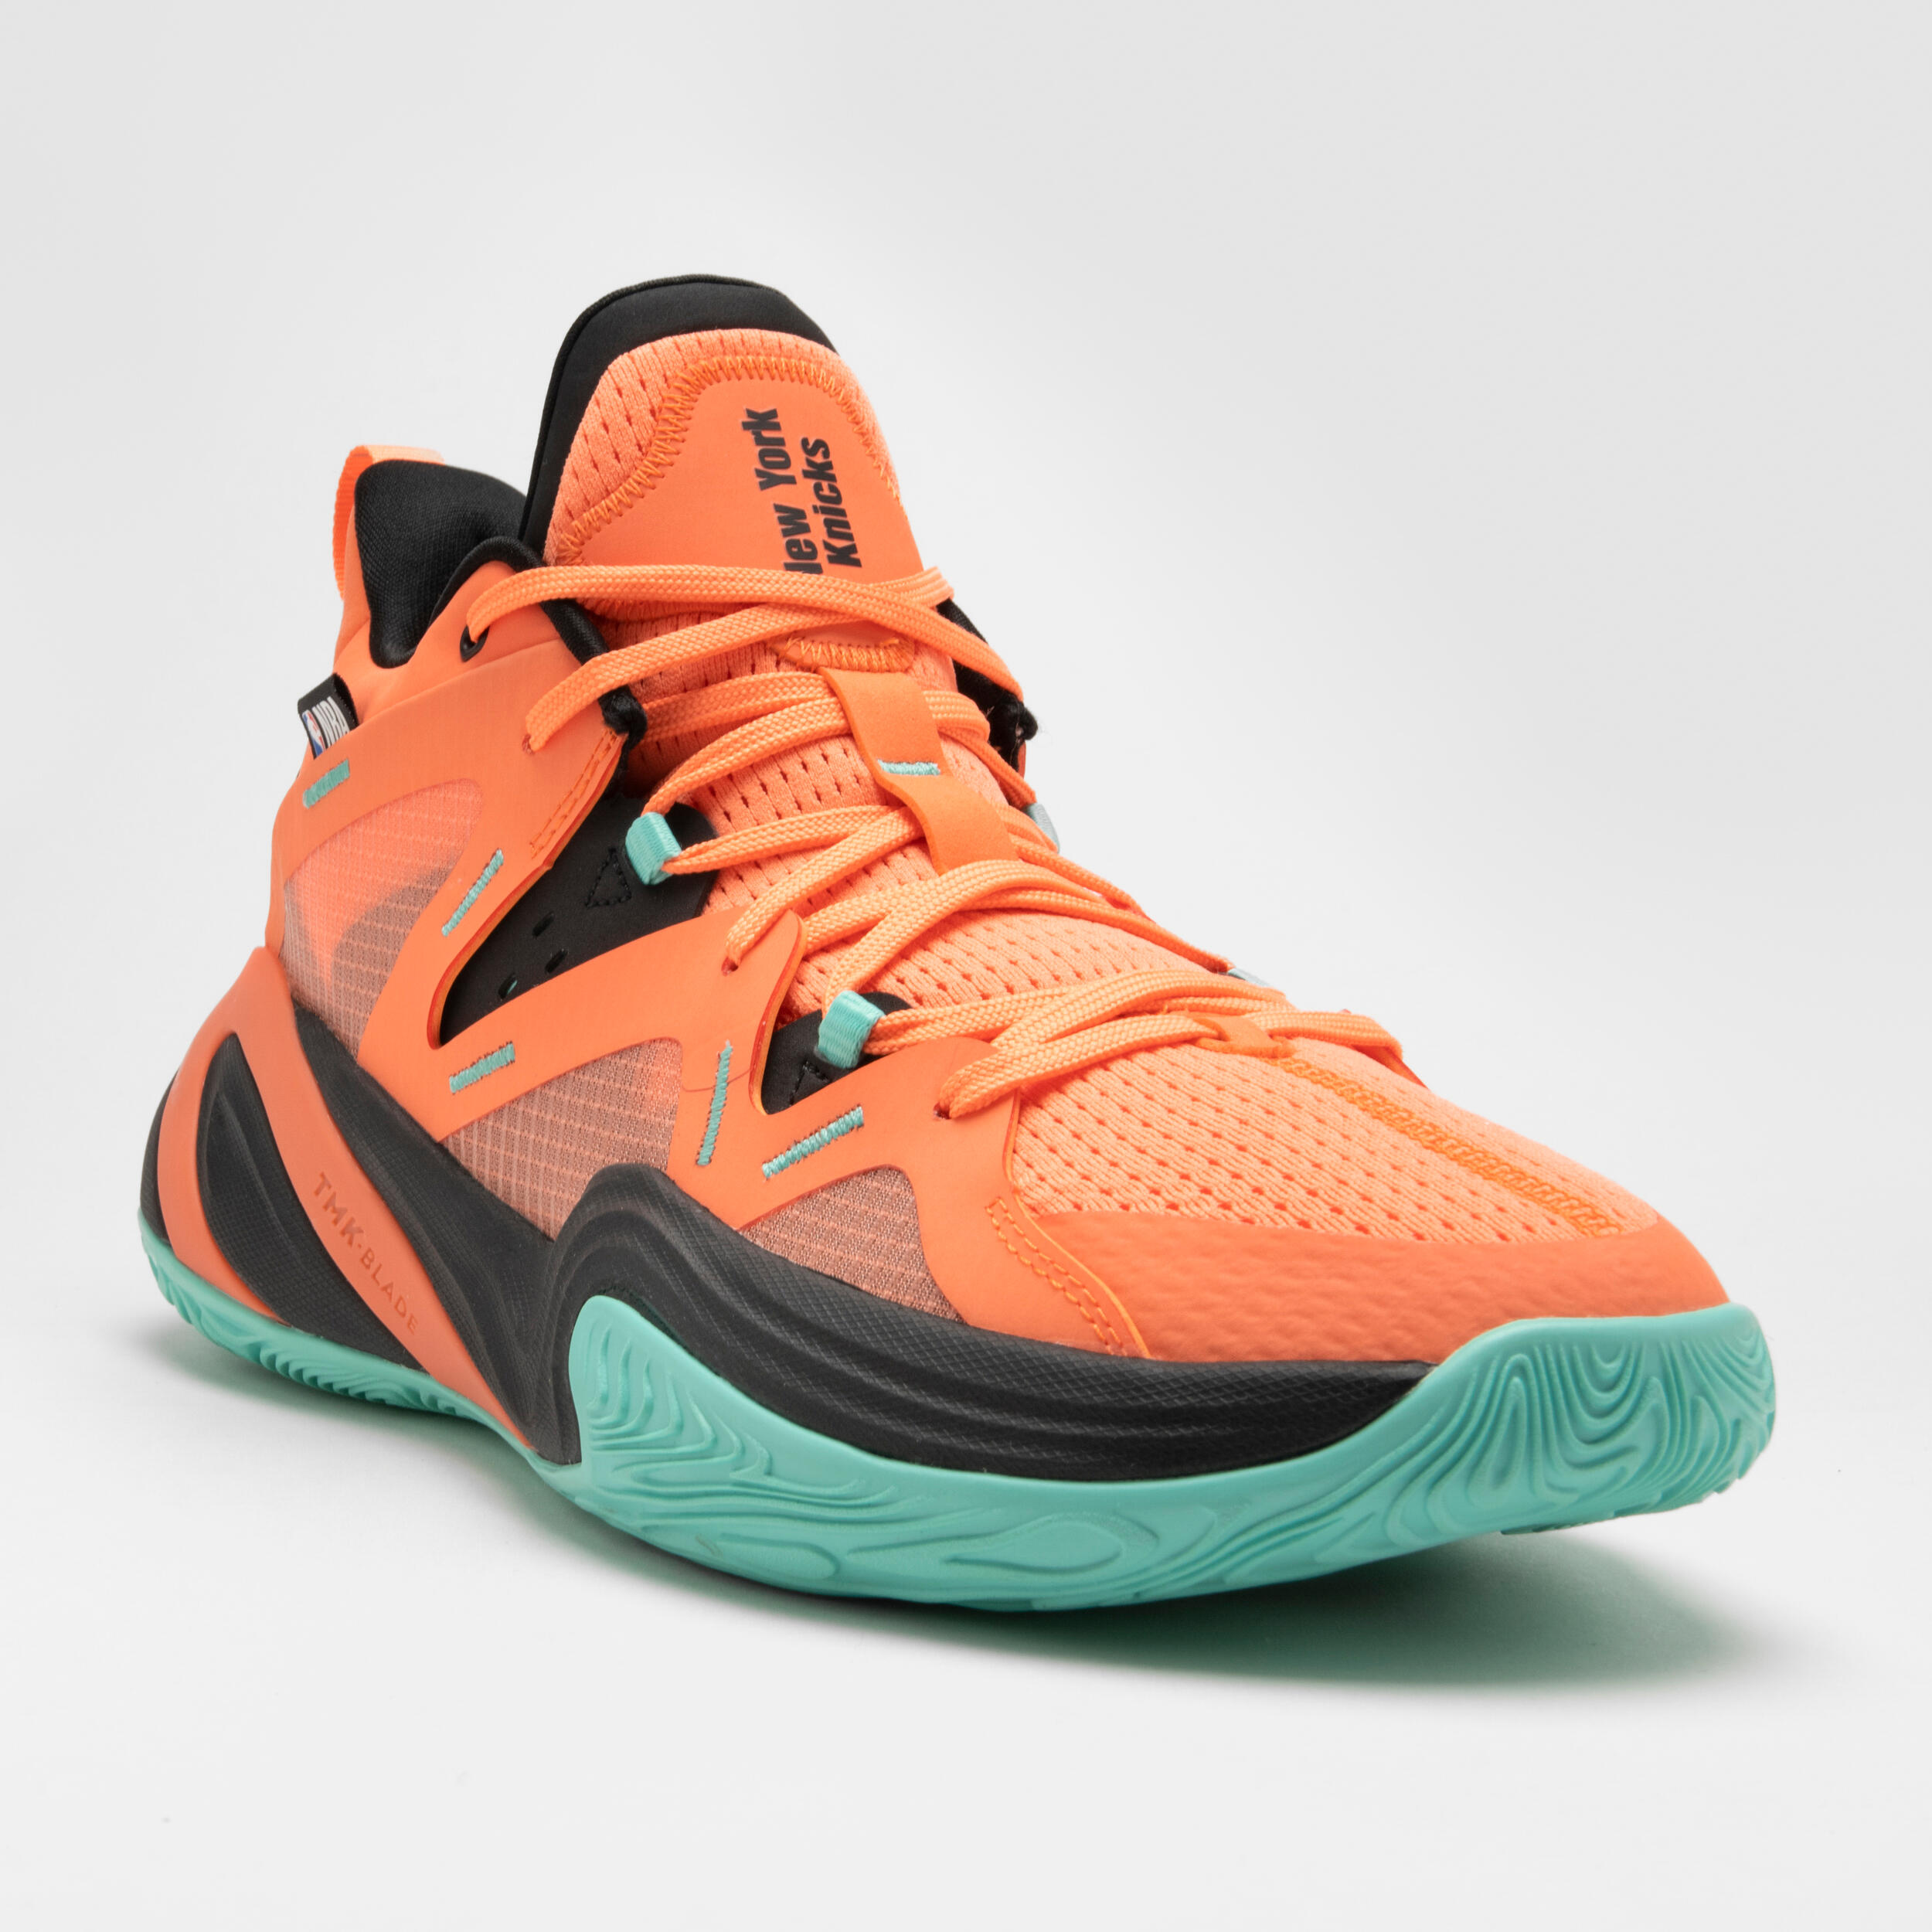 Men's/Women's Basketball Shoes 900 NBA MID-3 - New York Knicks/Orange 3/11